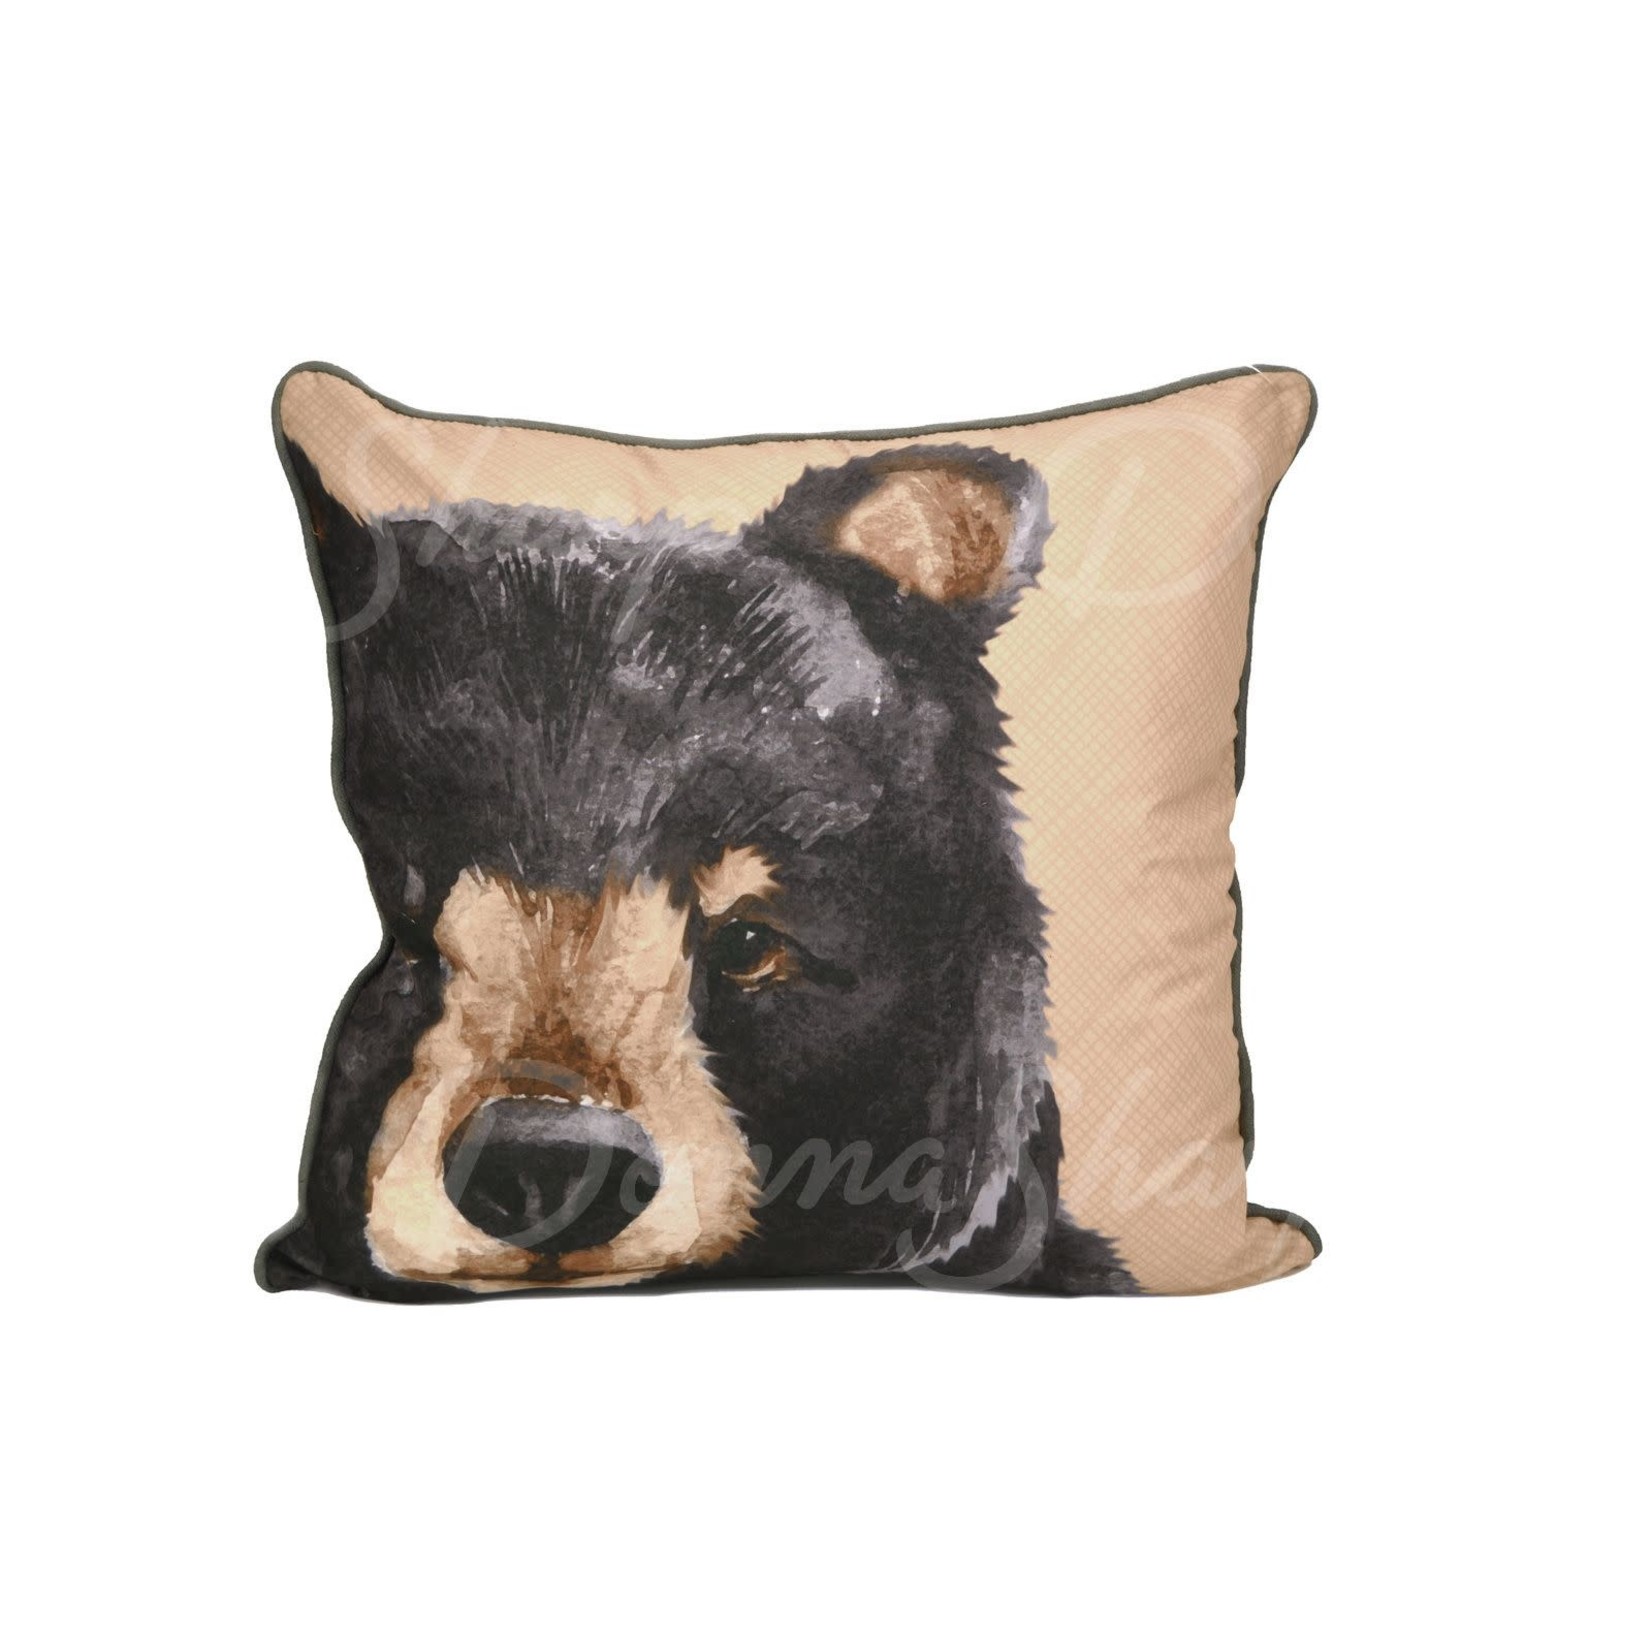 Bear face pillow